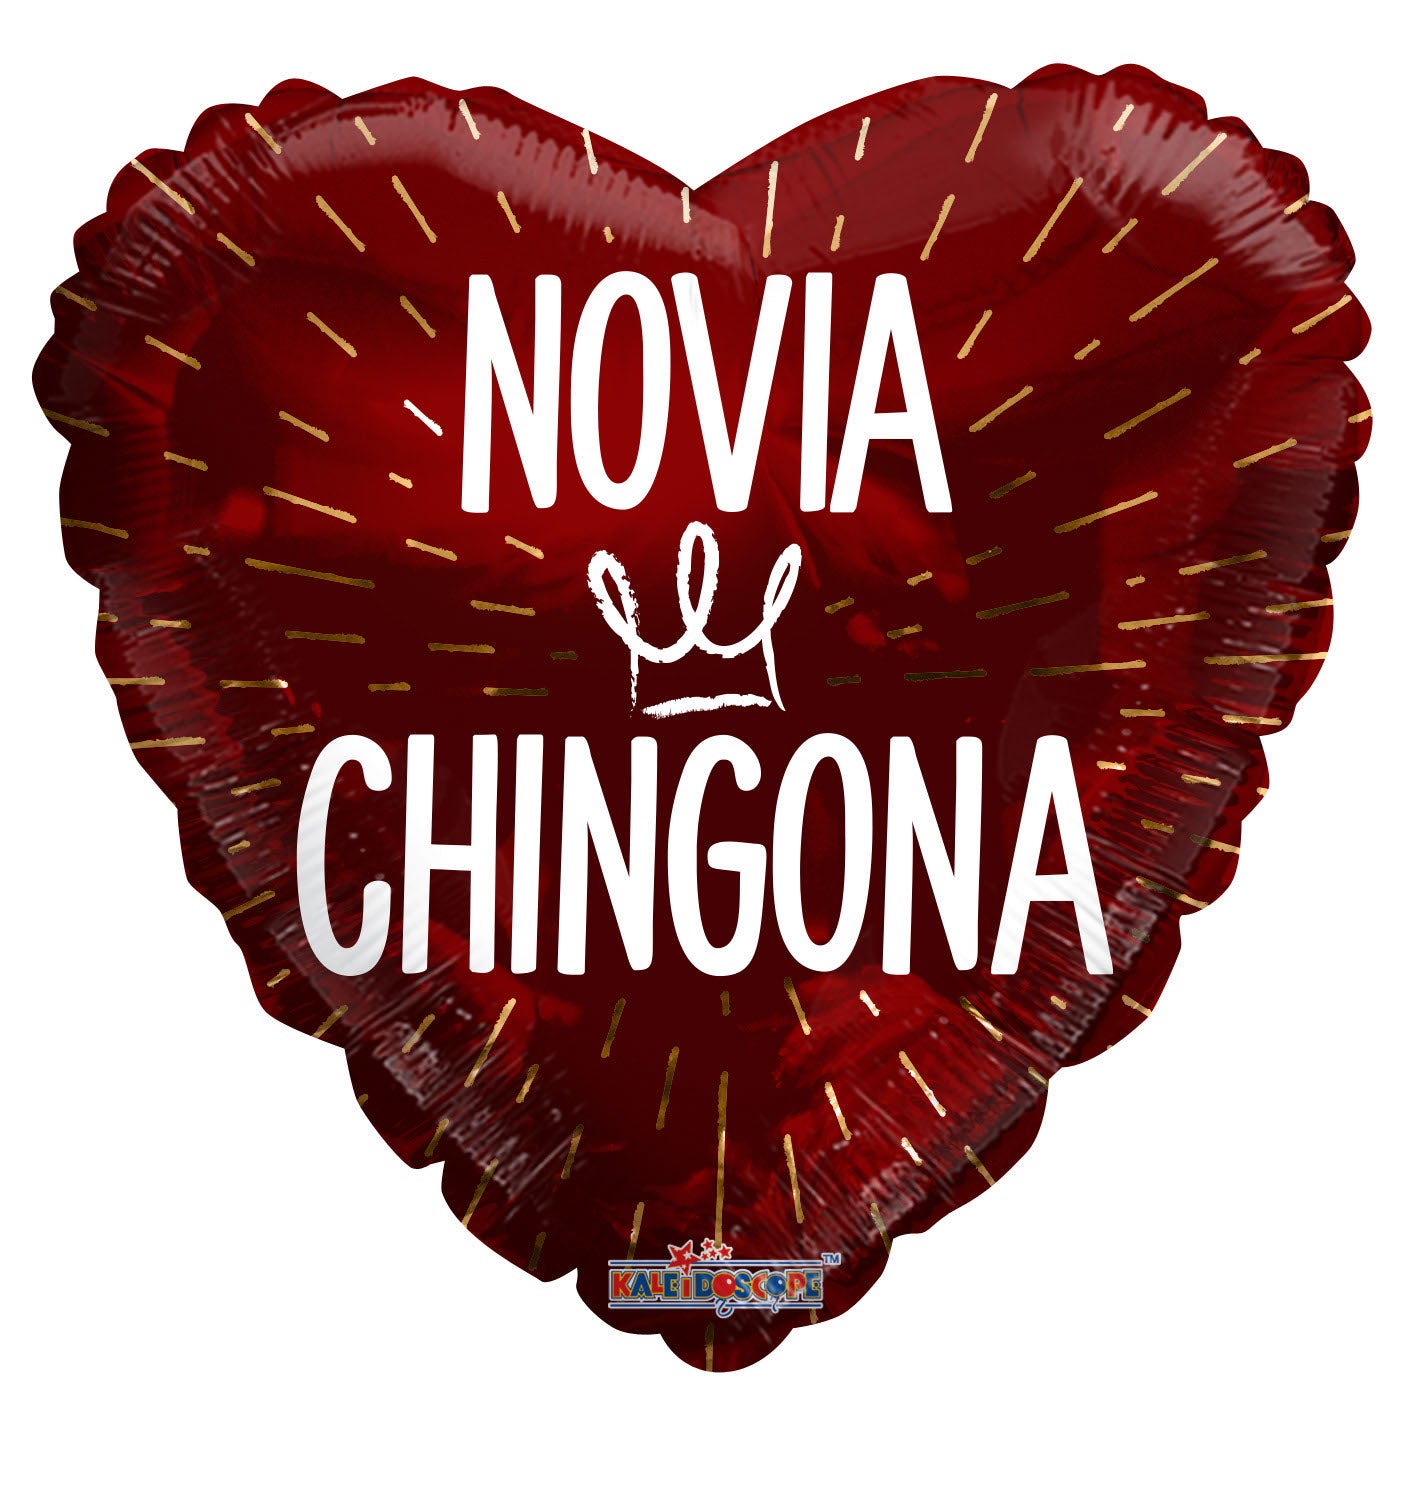 Novia Chingona